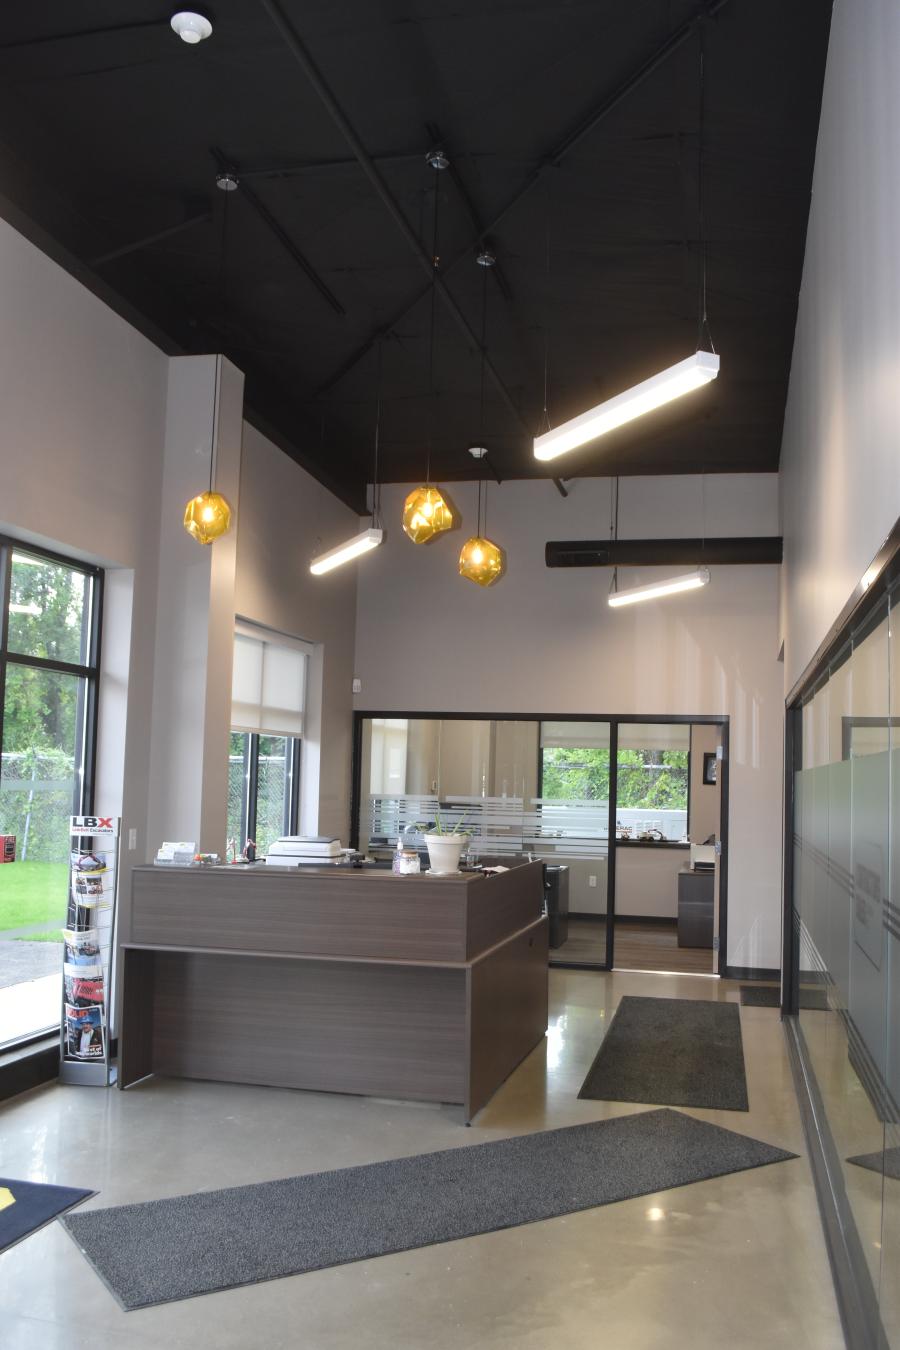 Contractors Sales Company’s Albany facility reception area.
(CEG photo)